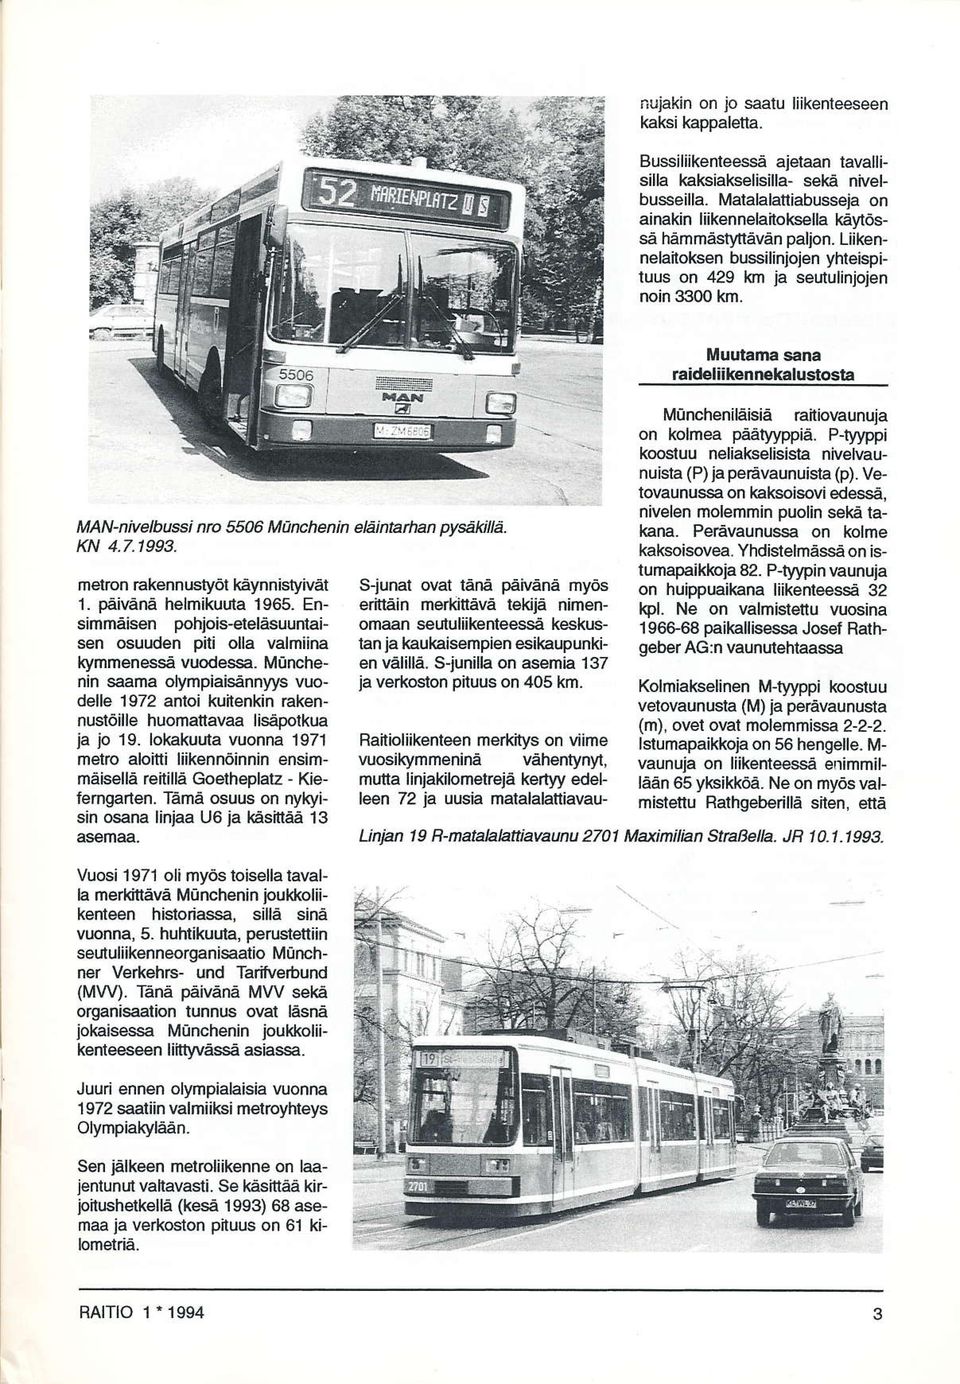 MAN-nivelbussi nrc 5506 Mtnchenin eläintahan pysäkilk. KN 4.7.1993. metron råkennustyöl kåynnistyivåt 1. påivånå helmikuuta 1965.